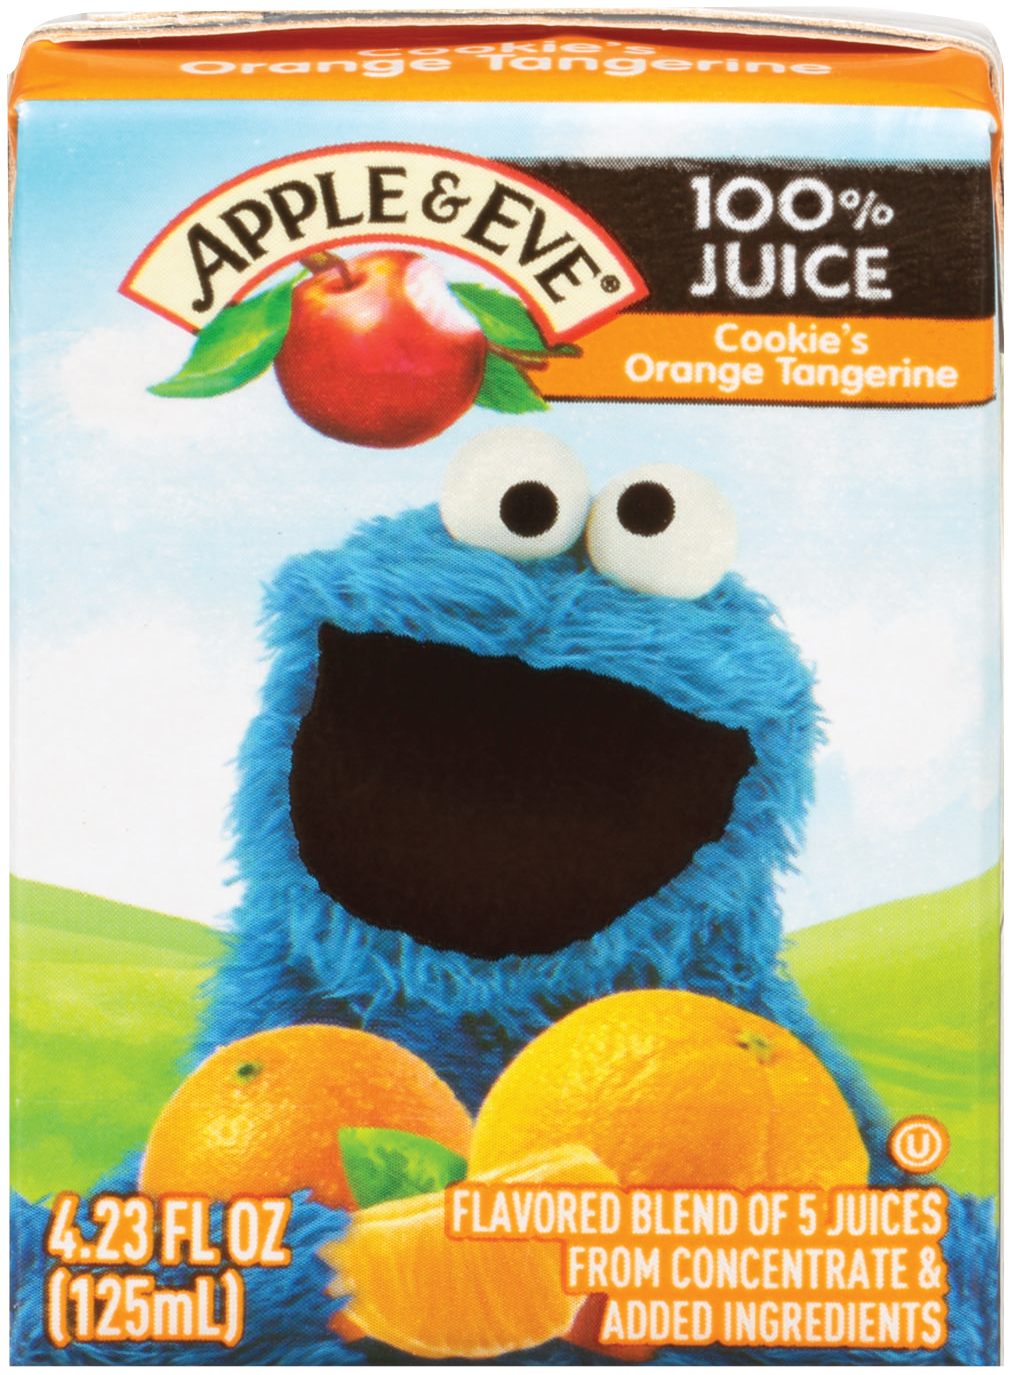 Cookie Monster’s Orange Tangerine